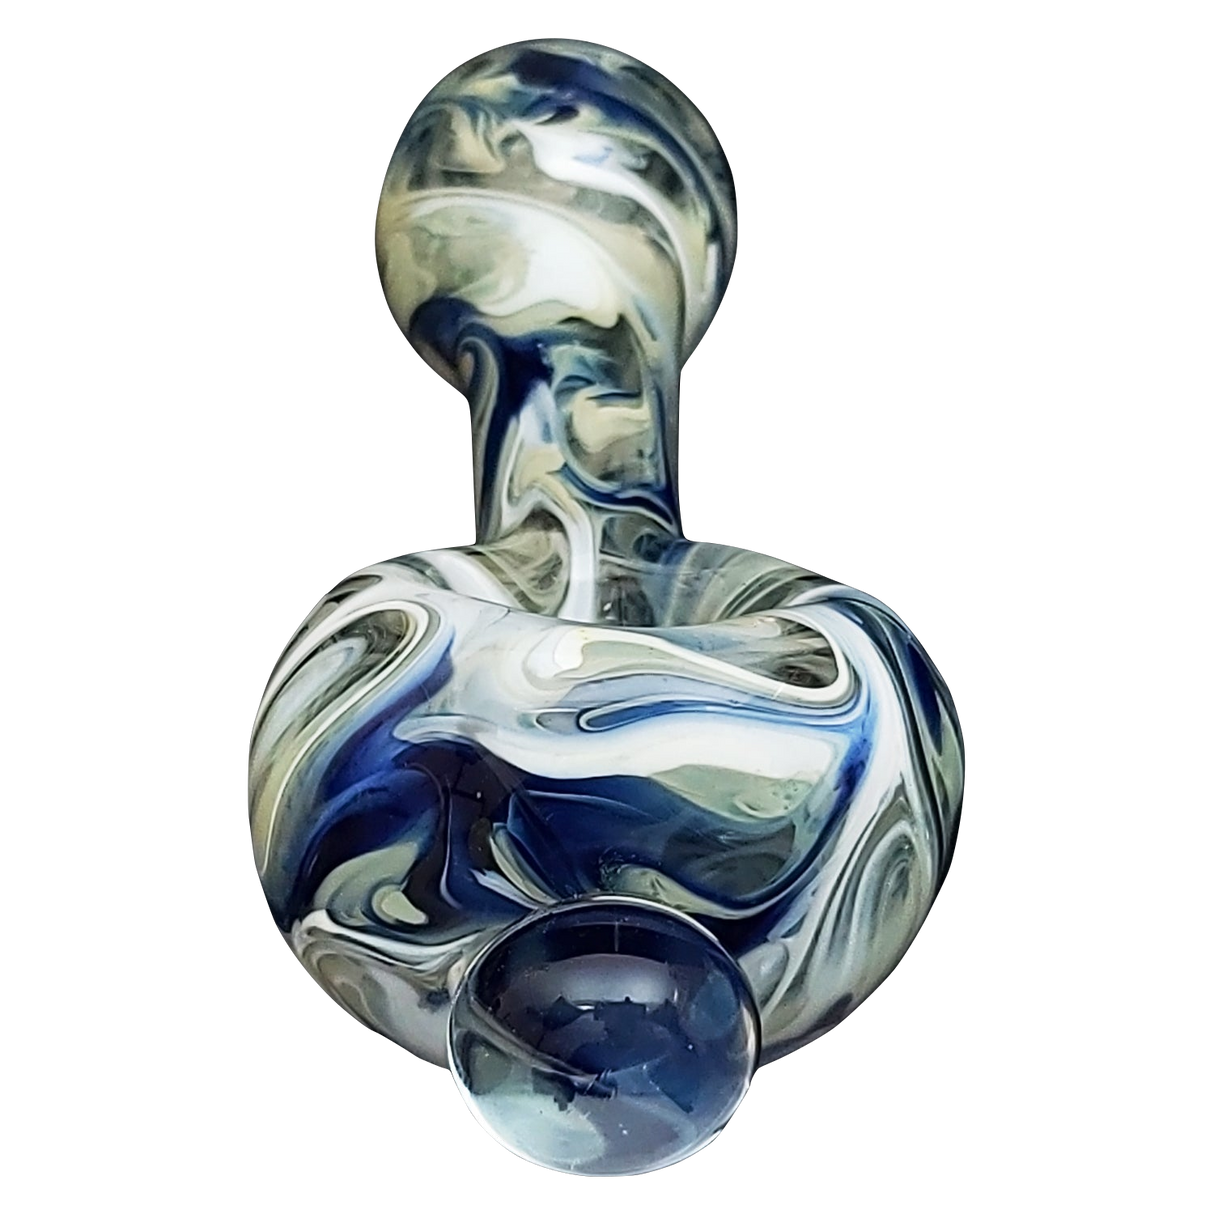 LA Pipes HP2 Spoon - Borosilicate Glass Hand Pipe with Swirl Design, Top View